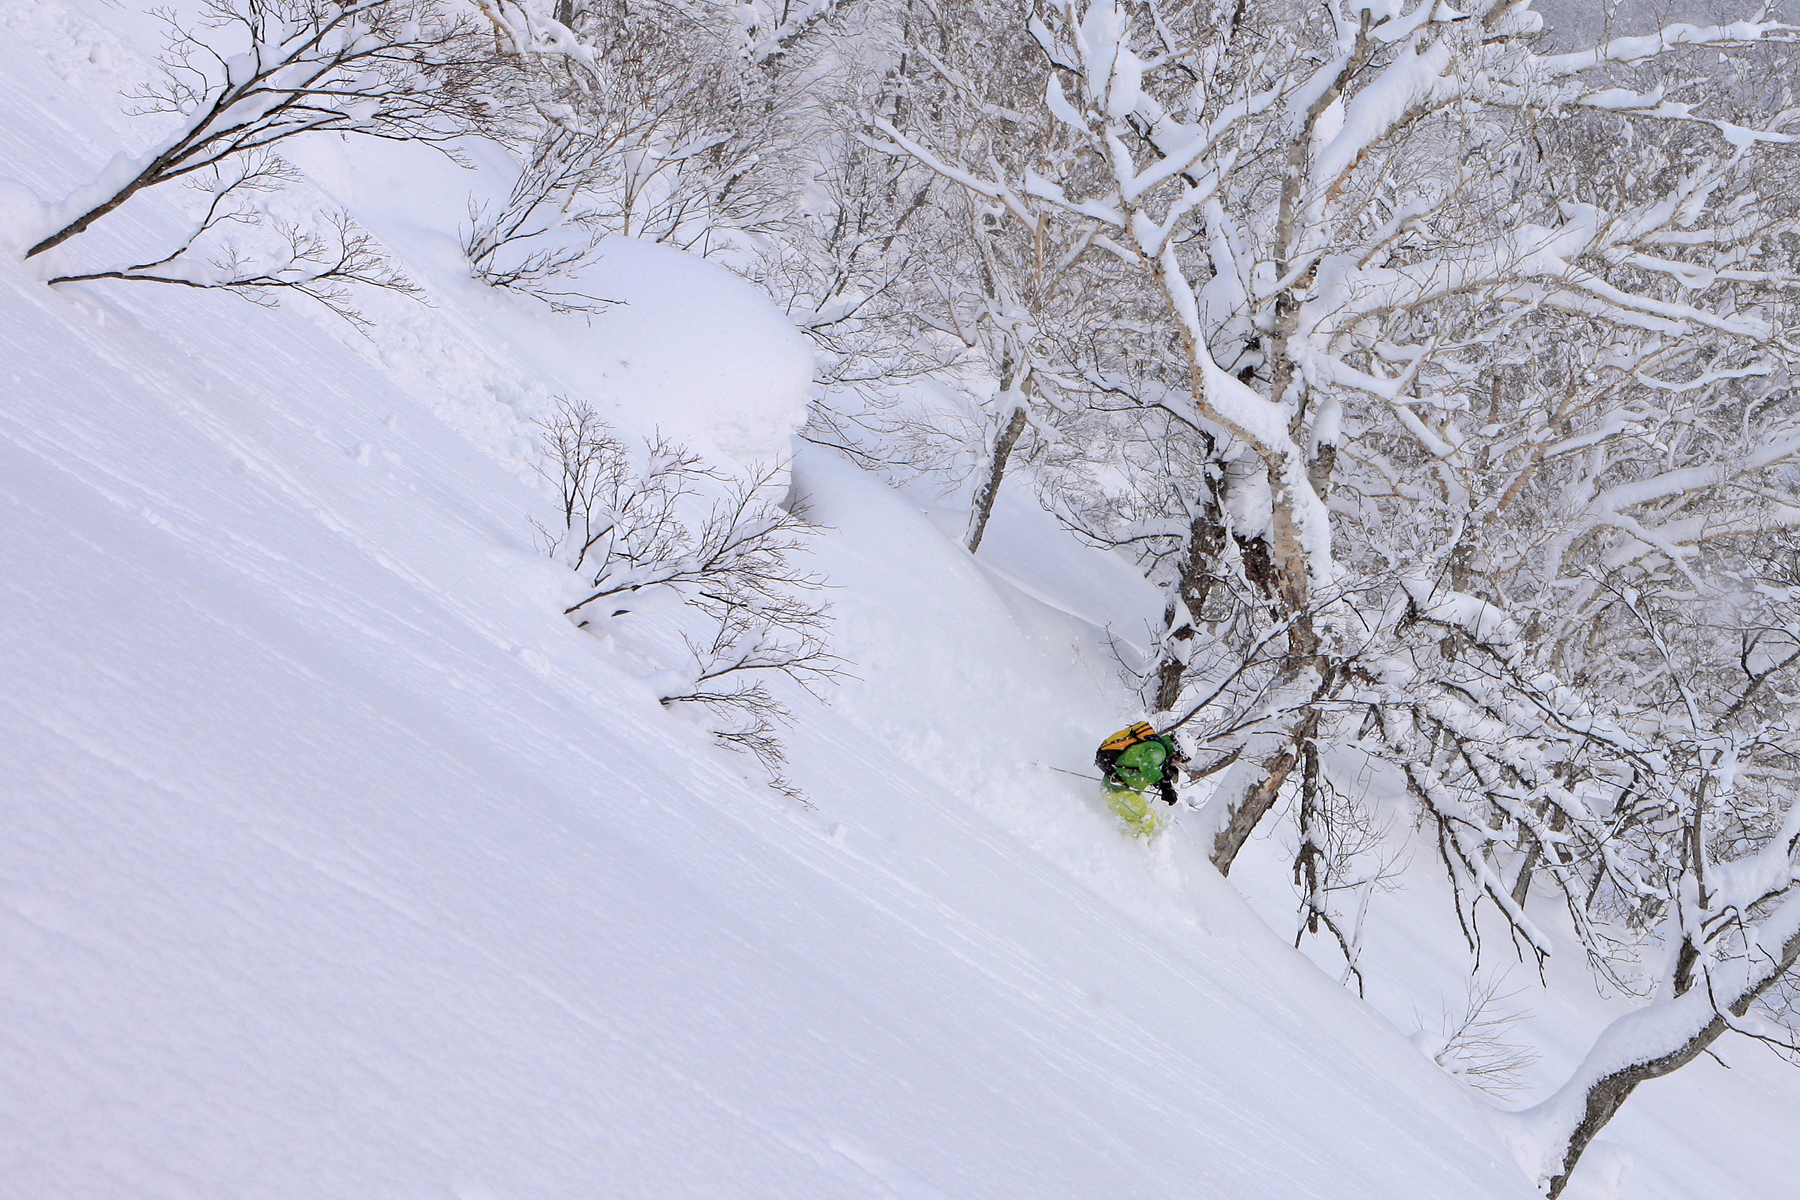 Anders Sjberg ker skidor i Annupuri, Japan. Foto: Henrik Bonnevier 